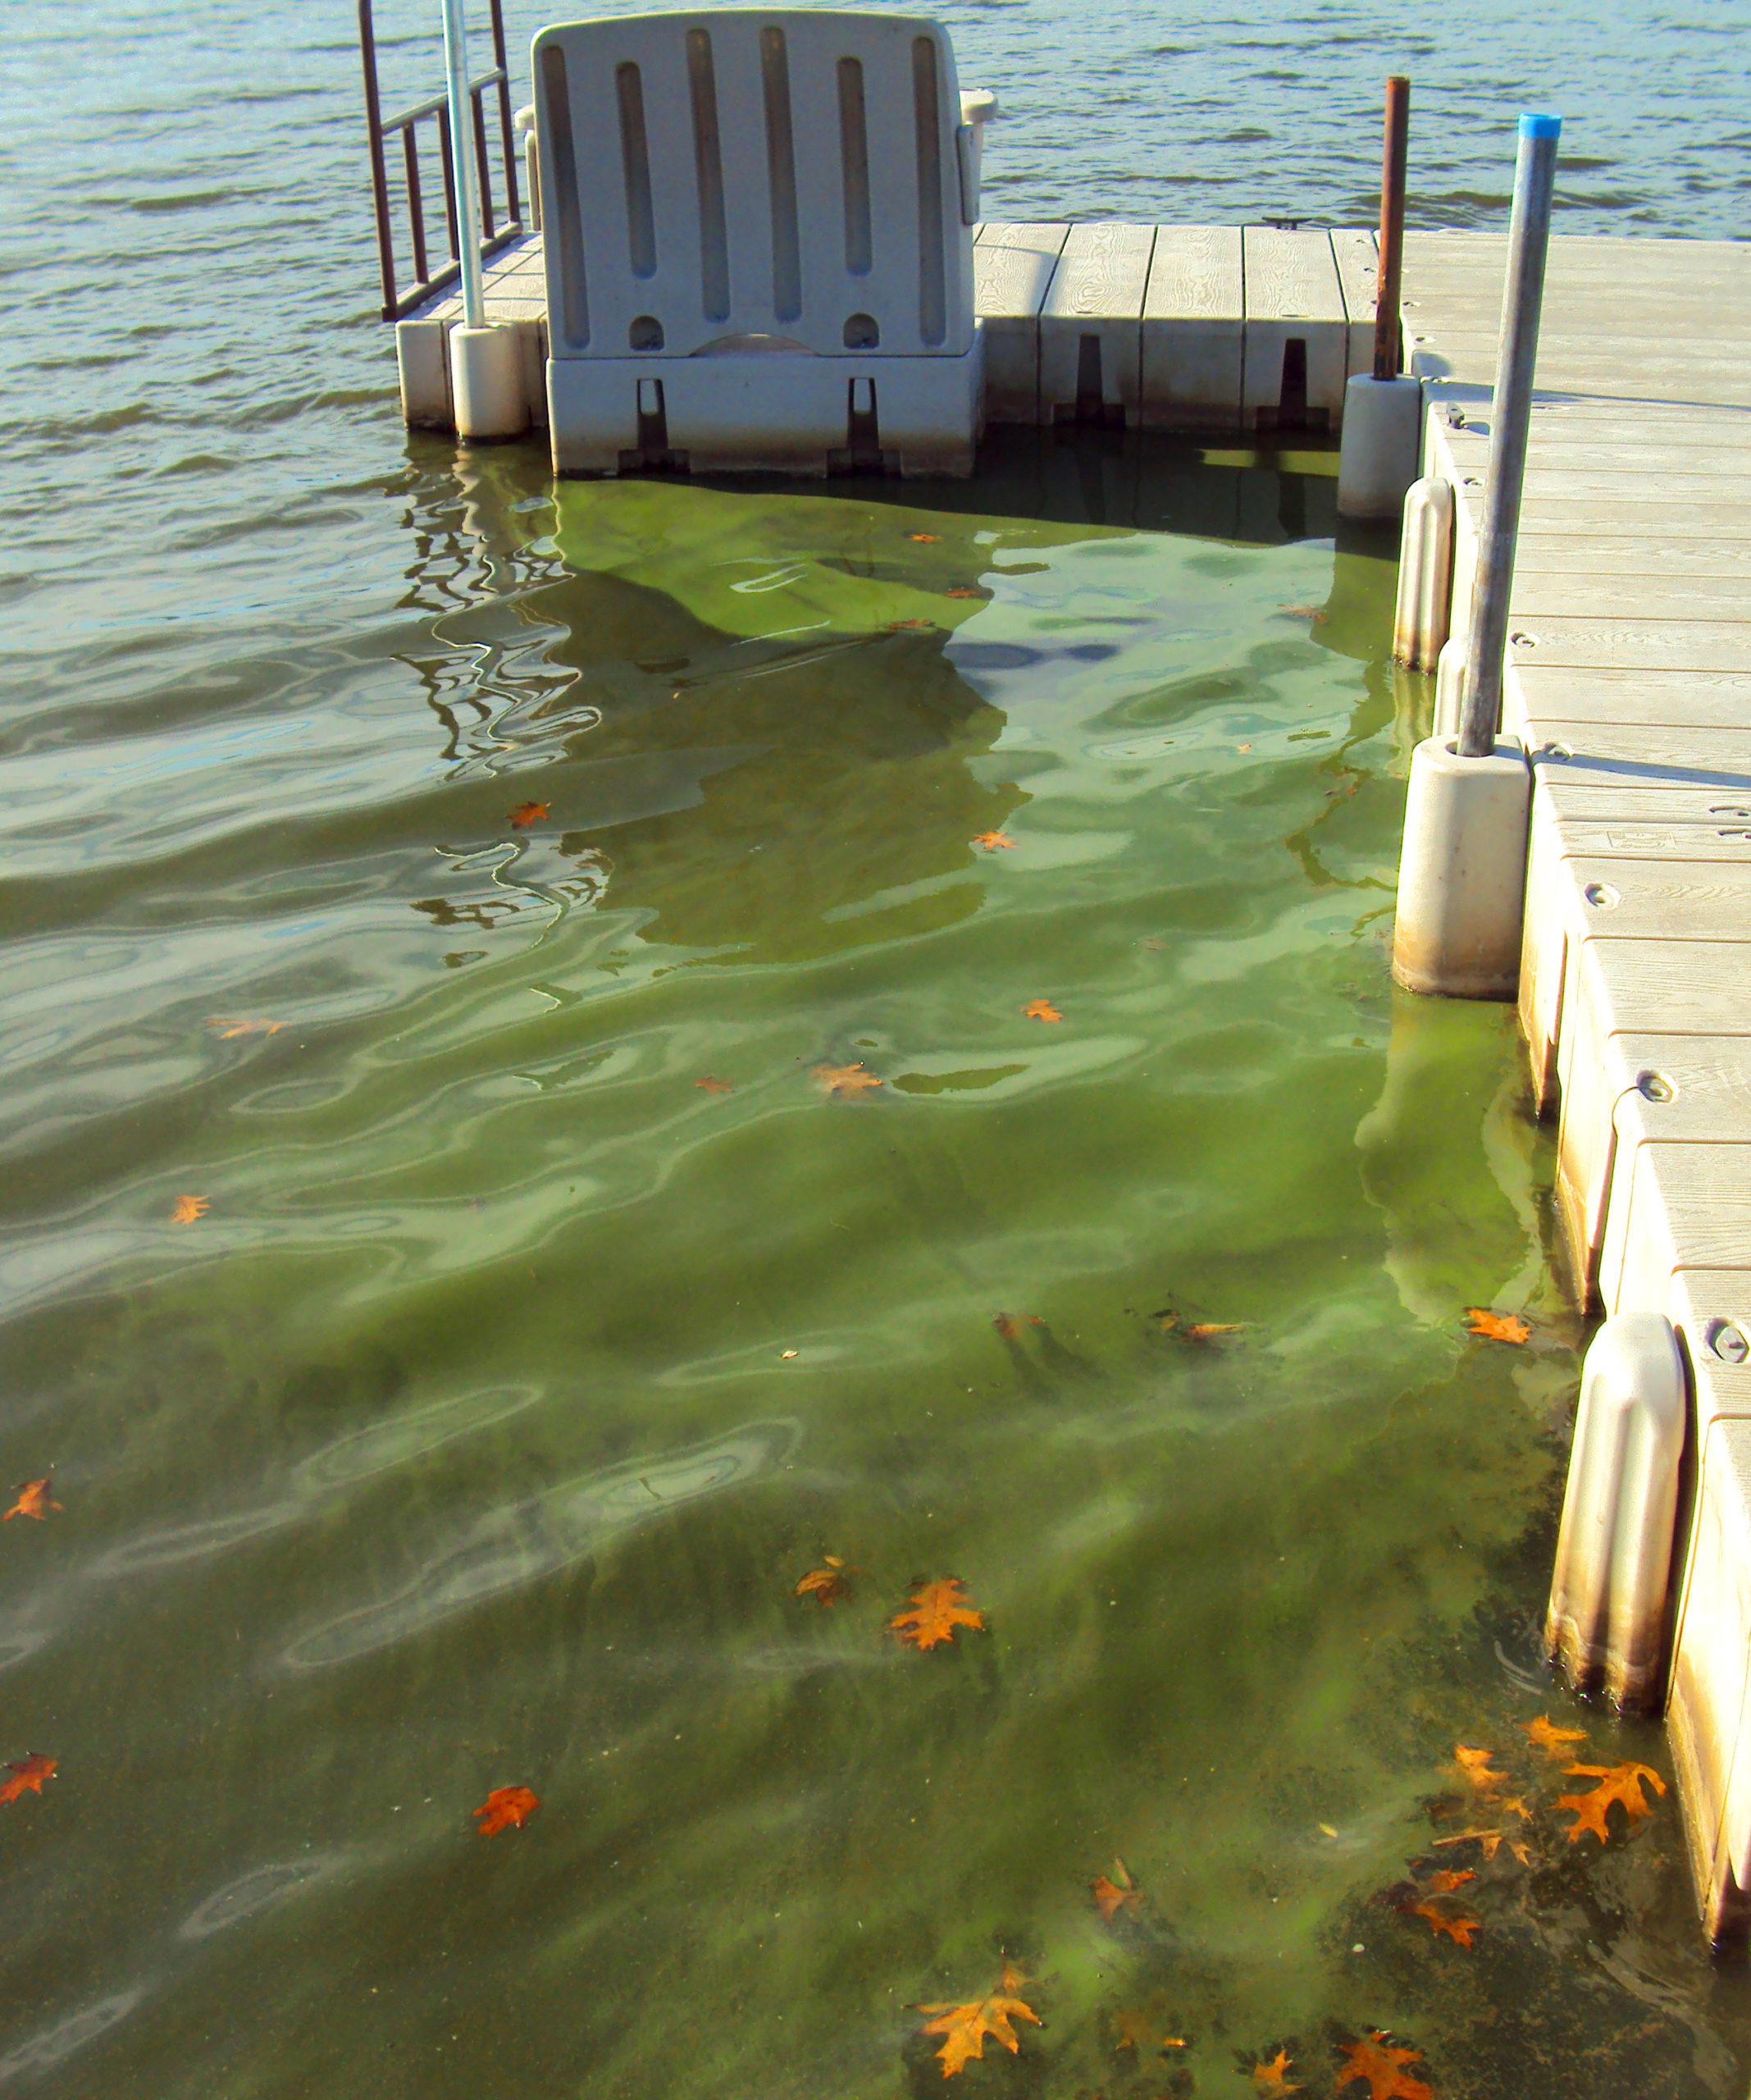 west lake osceola water source quality